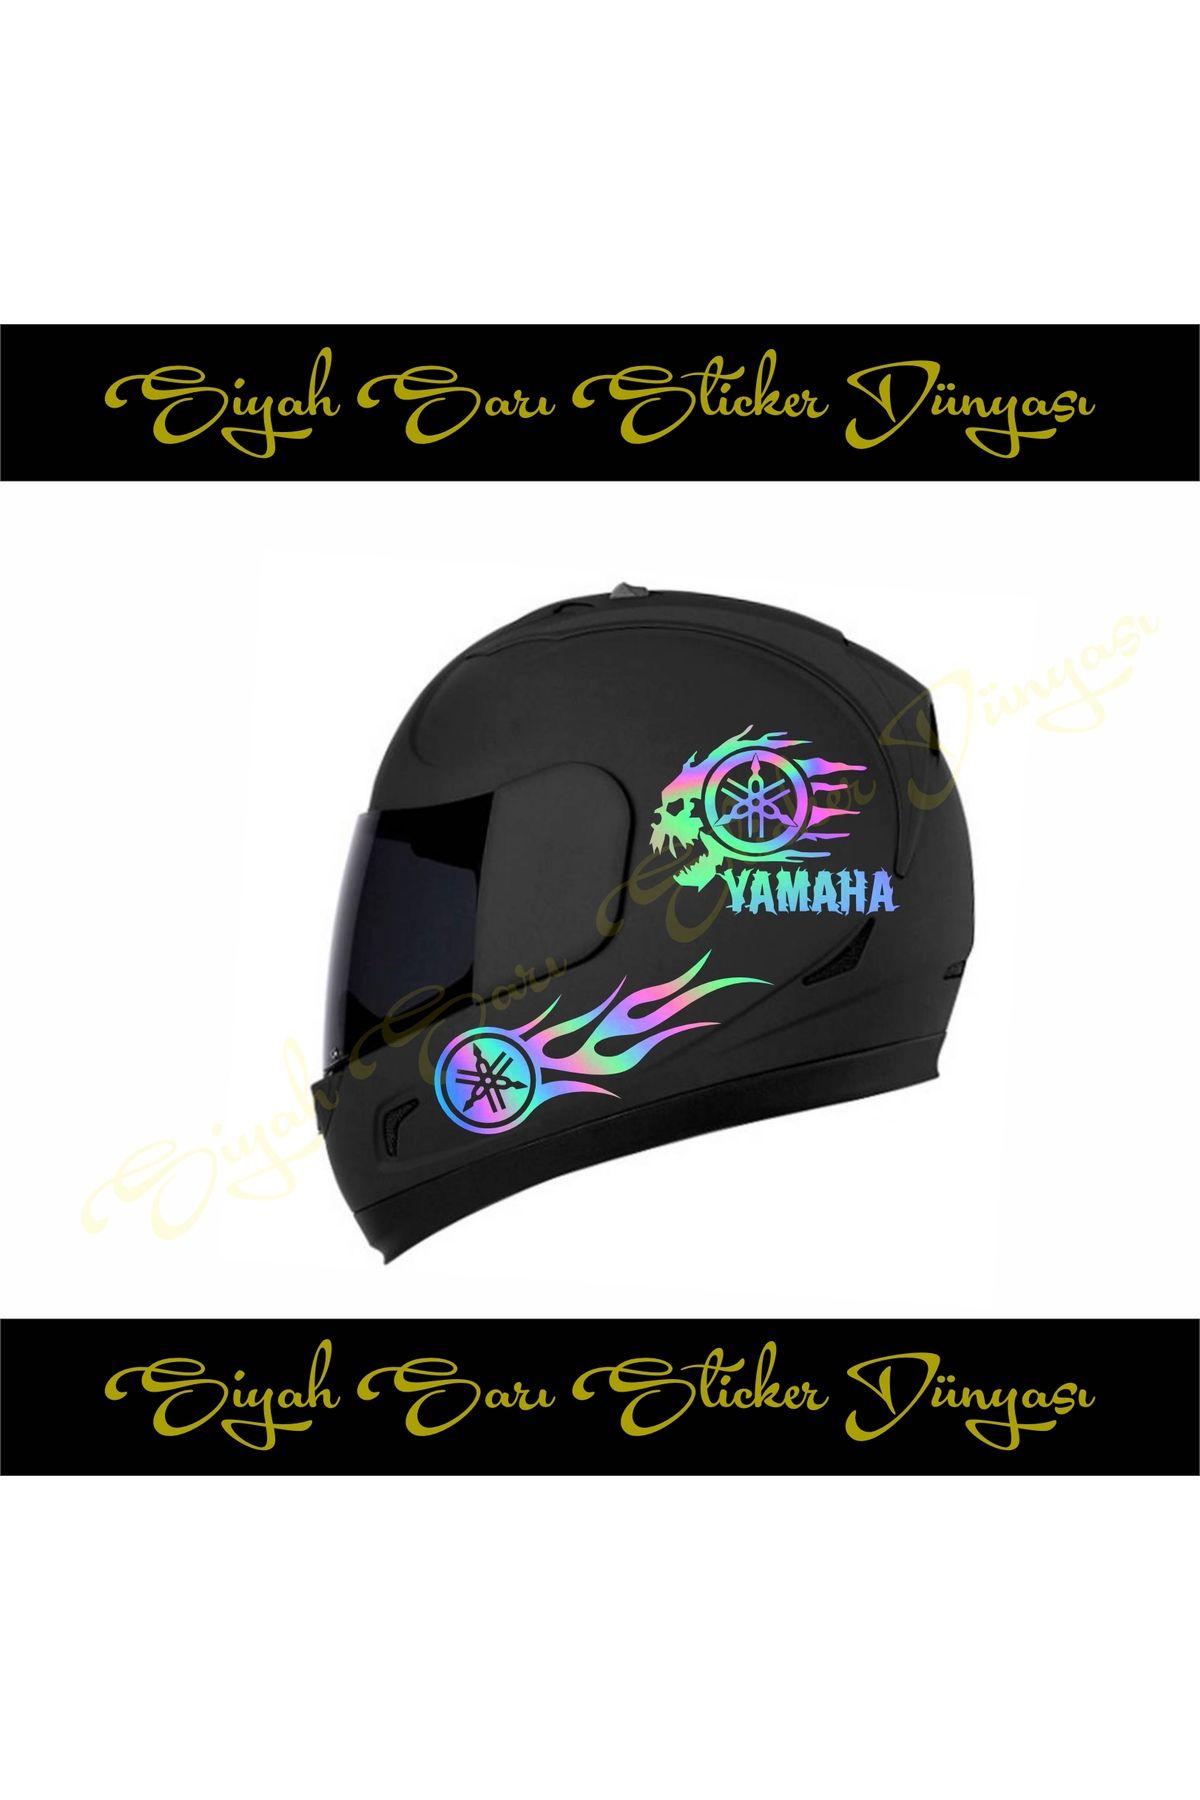 S&S HEDİYELİK EŞYA Yamaha Ateş HOLOGRAMLI STİCKER Motor Kask Arma Depo Kapağı Araba  Otomobil Motorsiklet Etiket